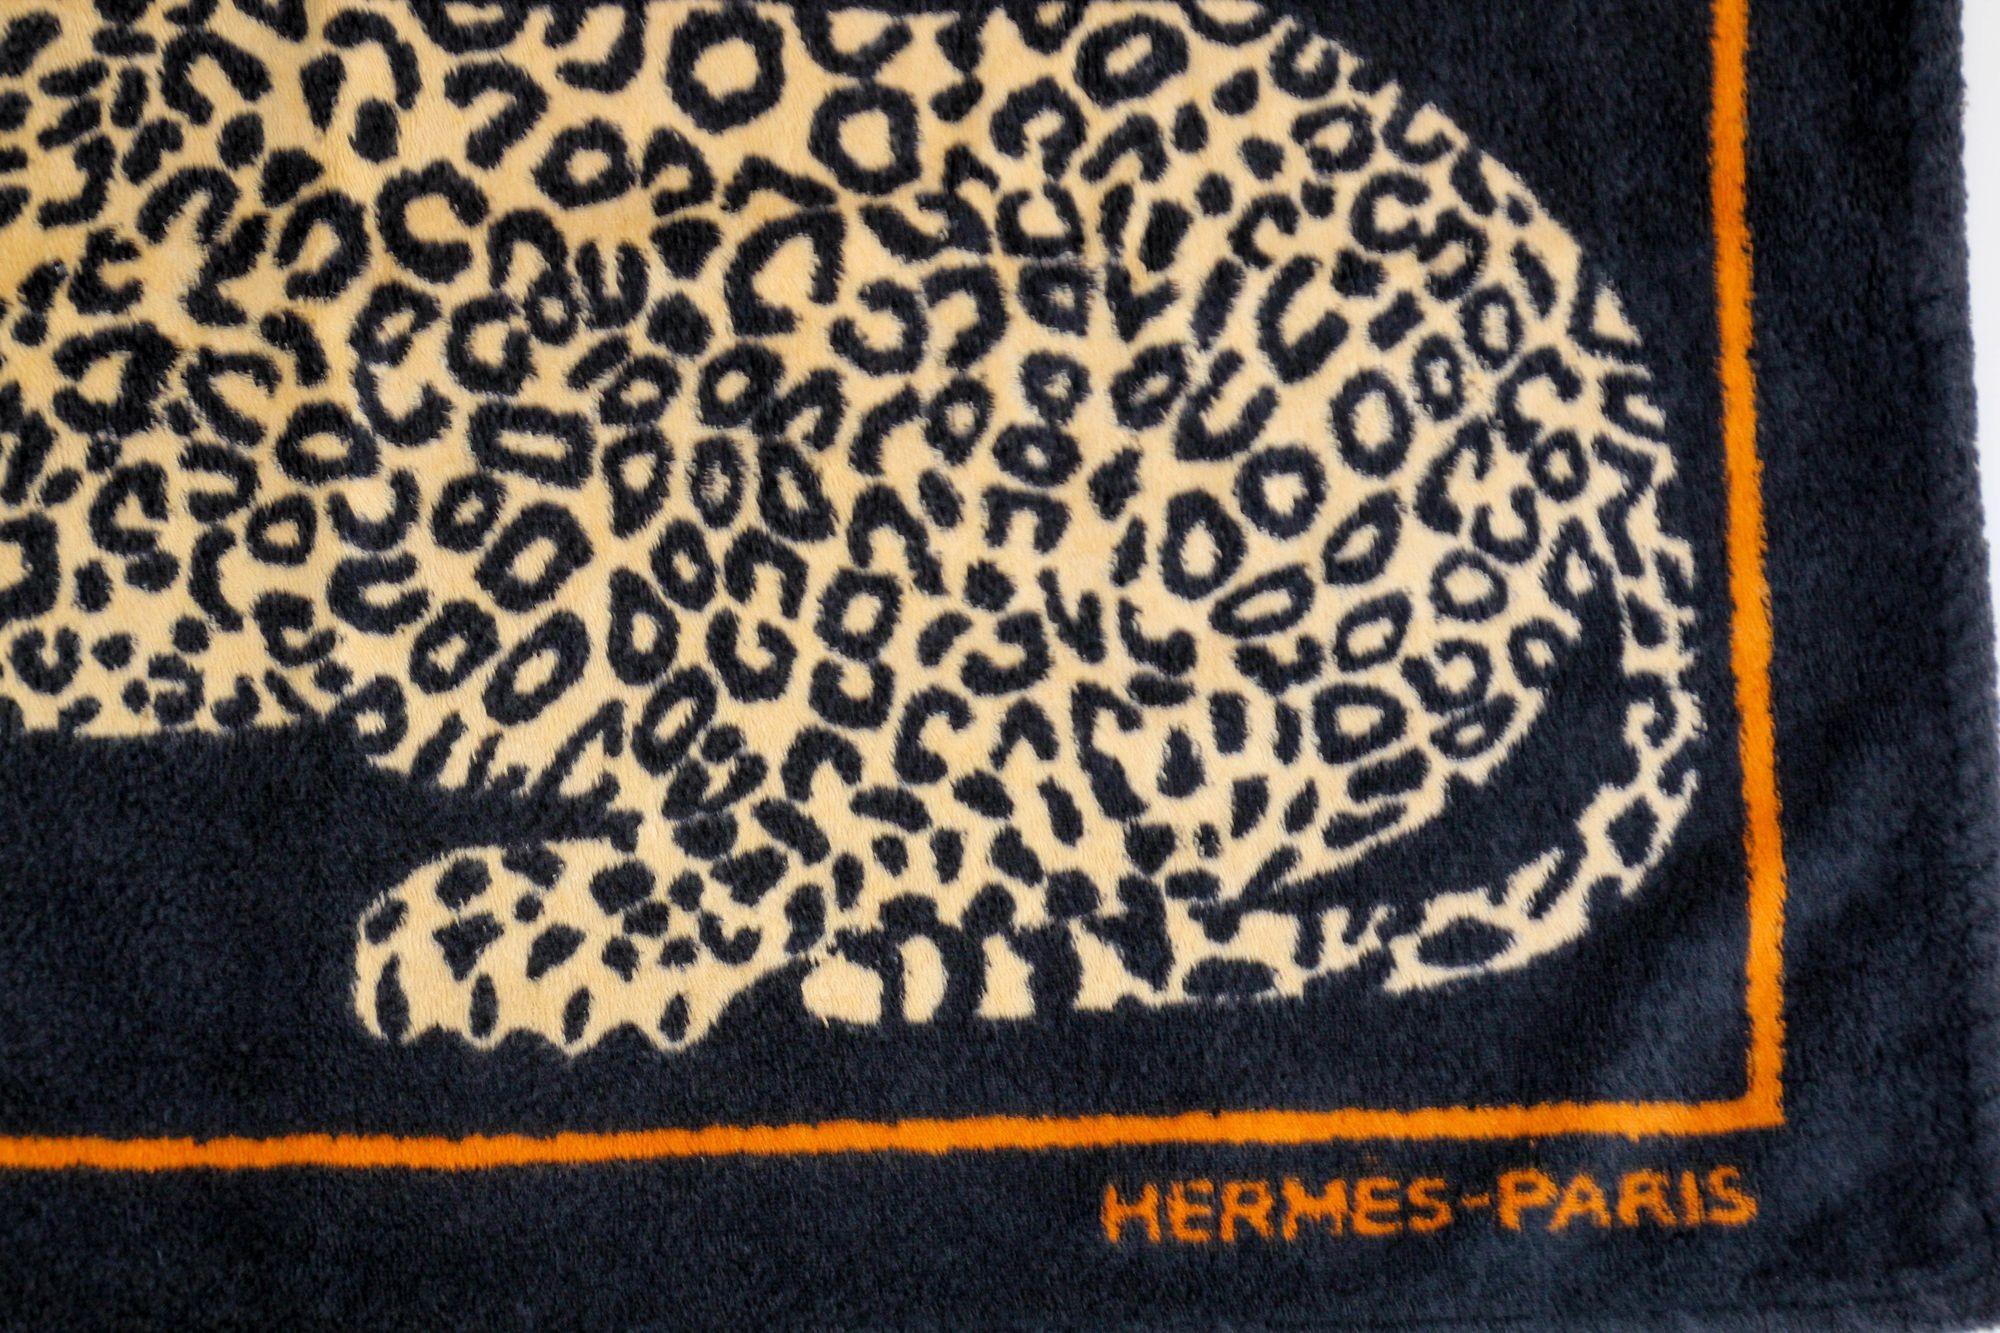 Textile Hermes Paris Small Bath Mat with a Leopard Print in Black and Orange